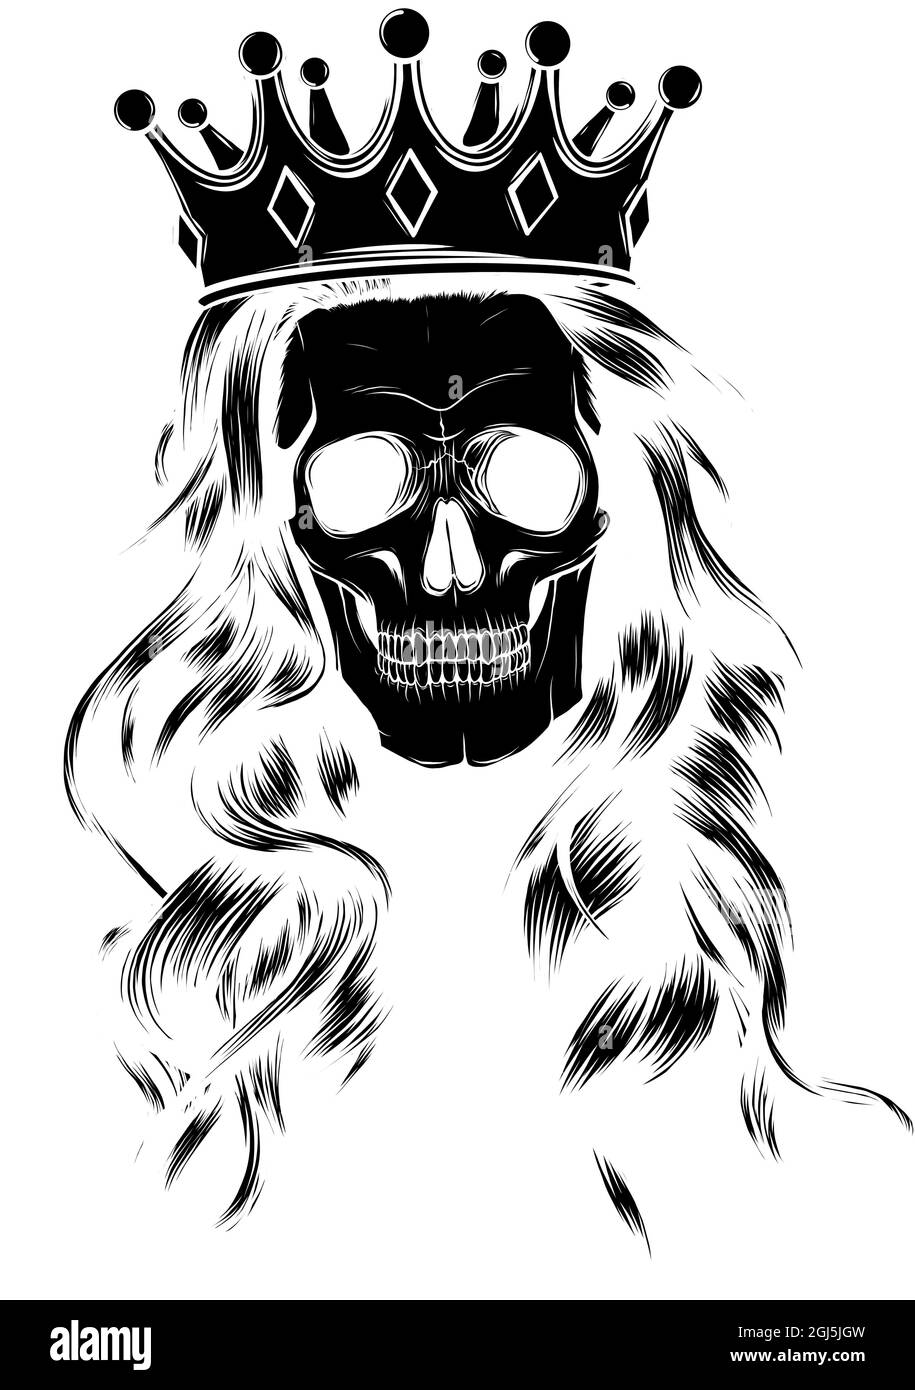 Skull in the crown. Vector vintage illustration Stock Vector